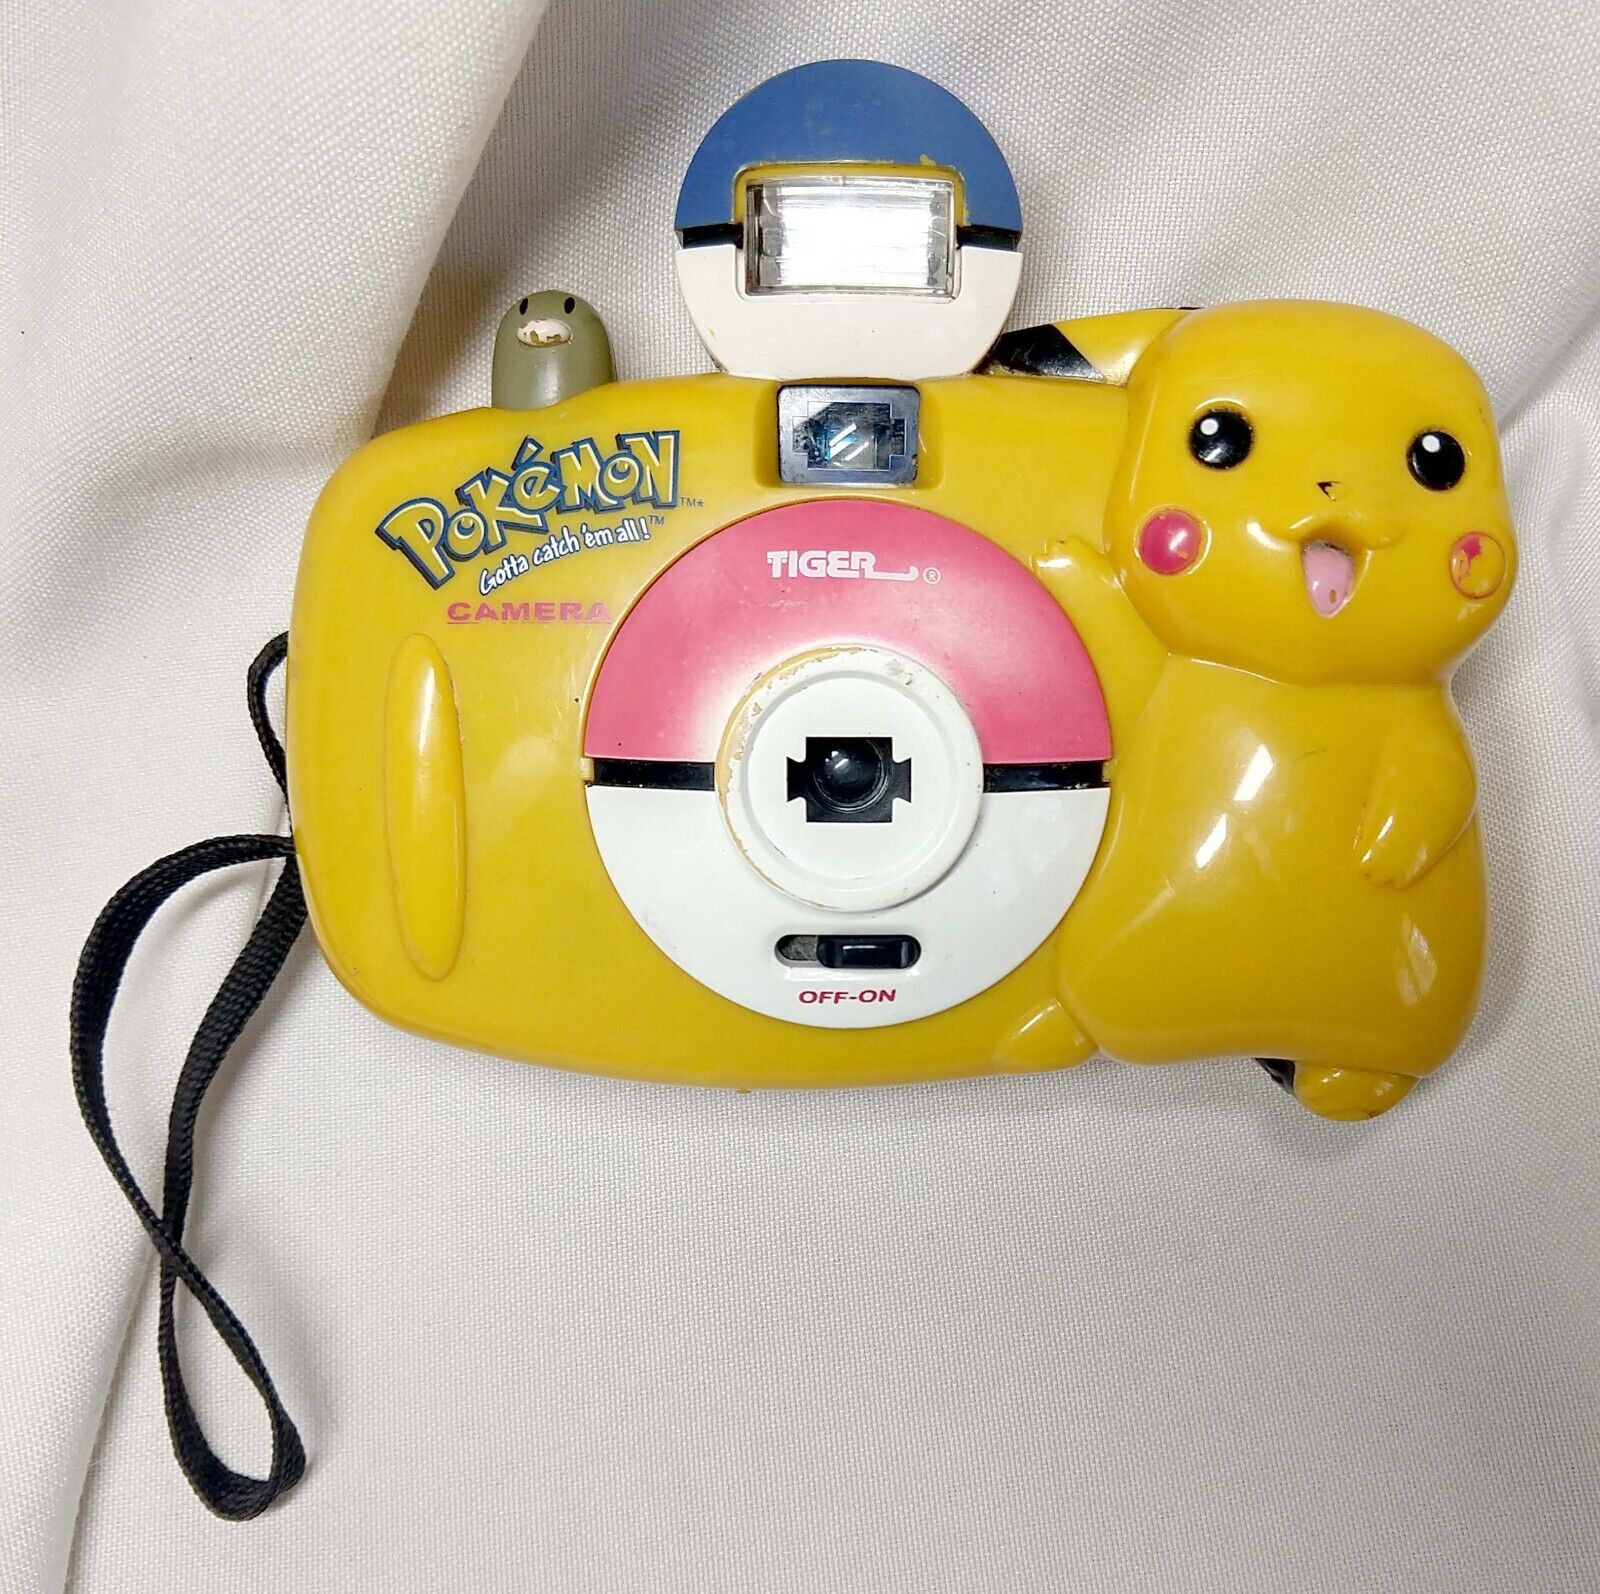 Vintage POKEMON Pikachu 35mm Camera 1999 Tiger VG cond